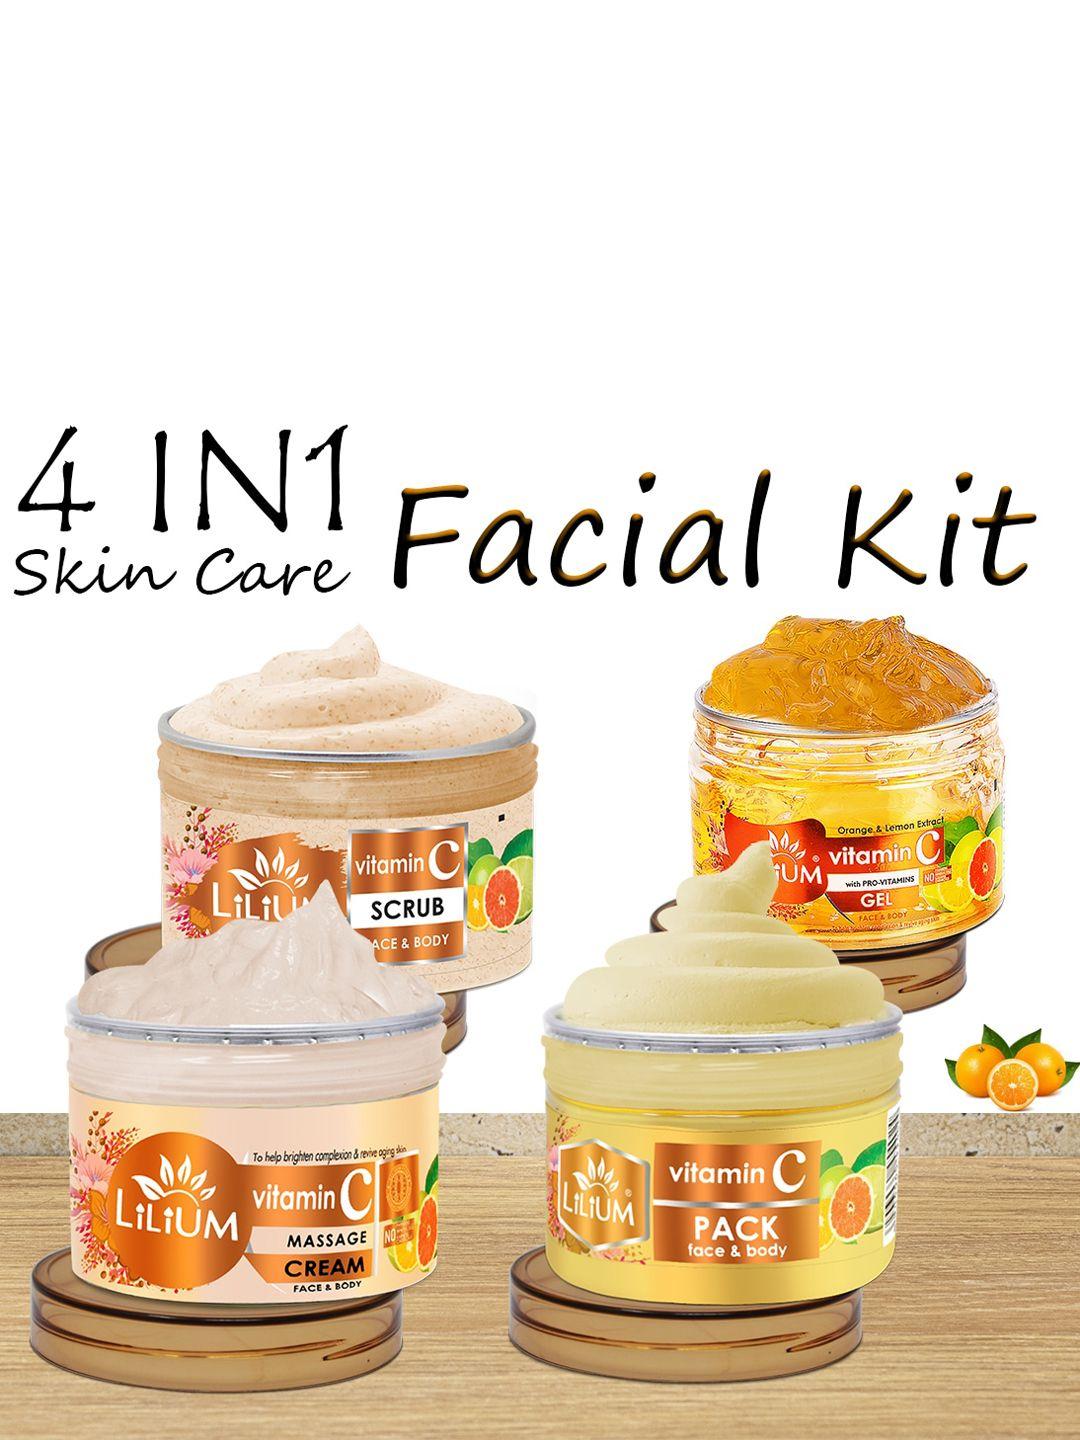 lilium vitamin c facial kit with lemon & orange extract